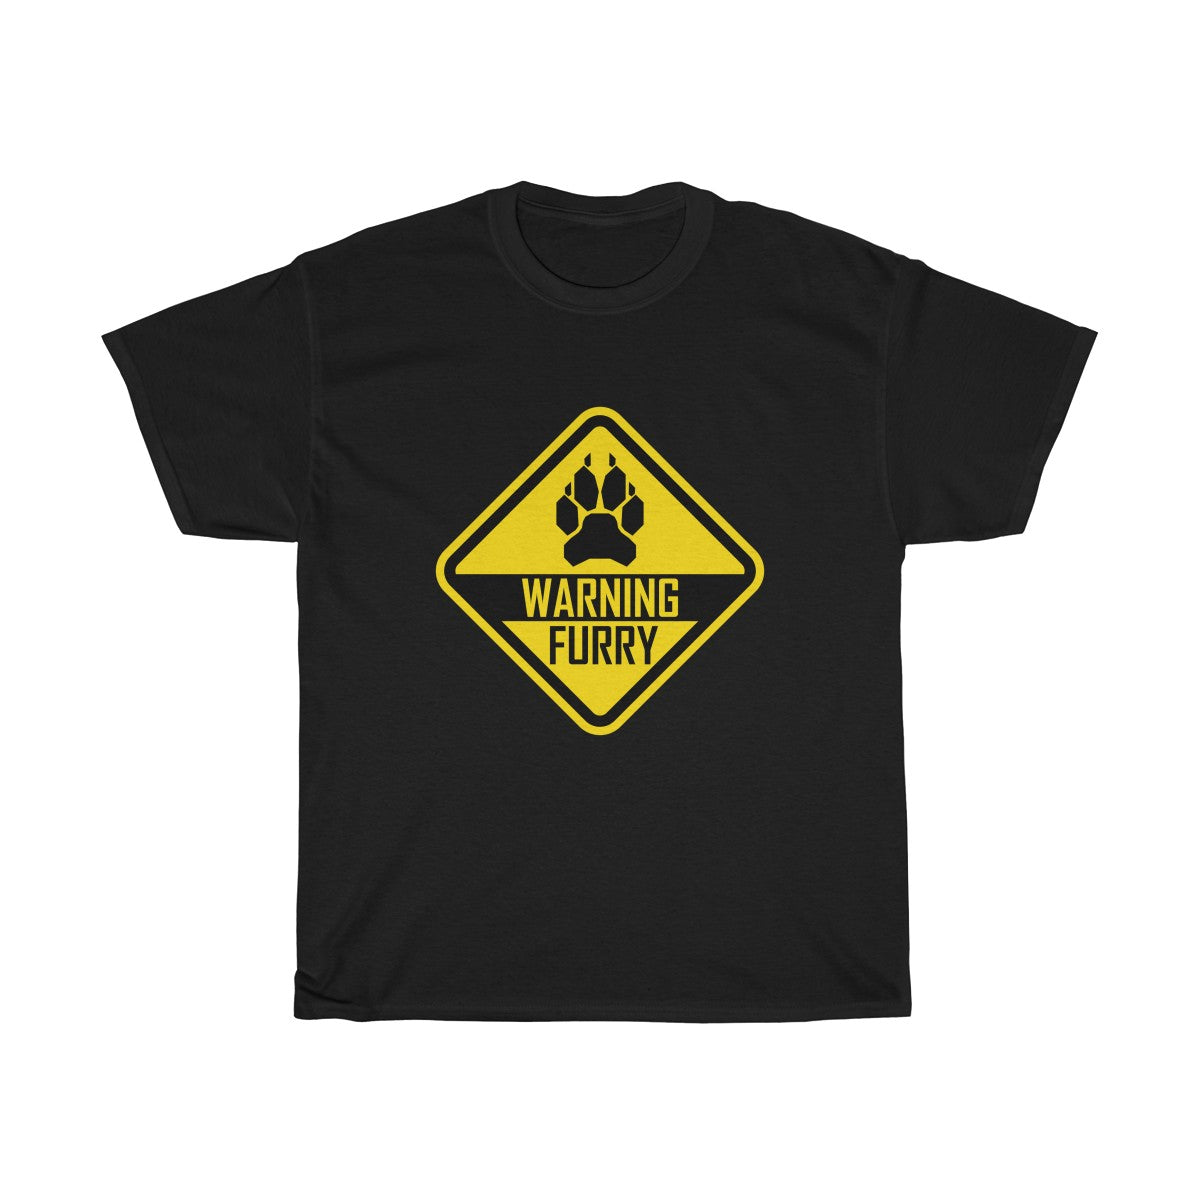 Warning Canine - T-Shirt T-Shirt Wexon Black S 